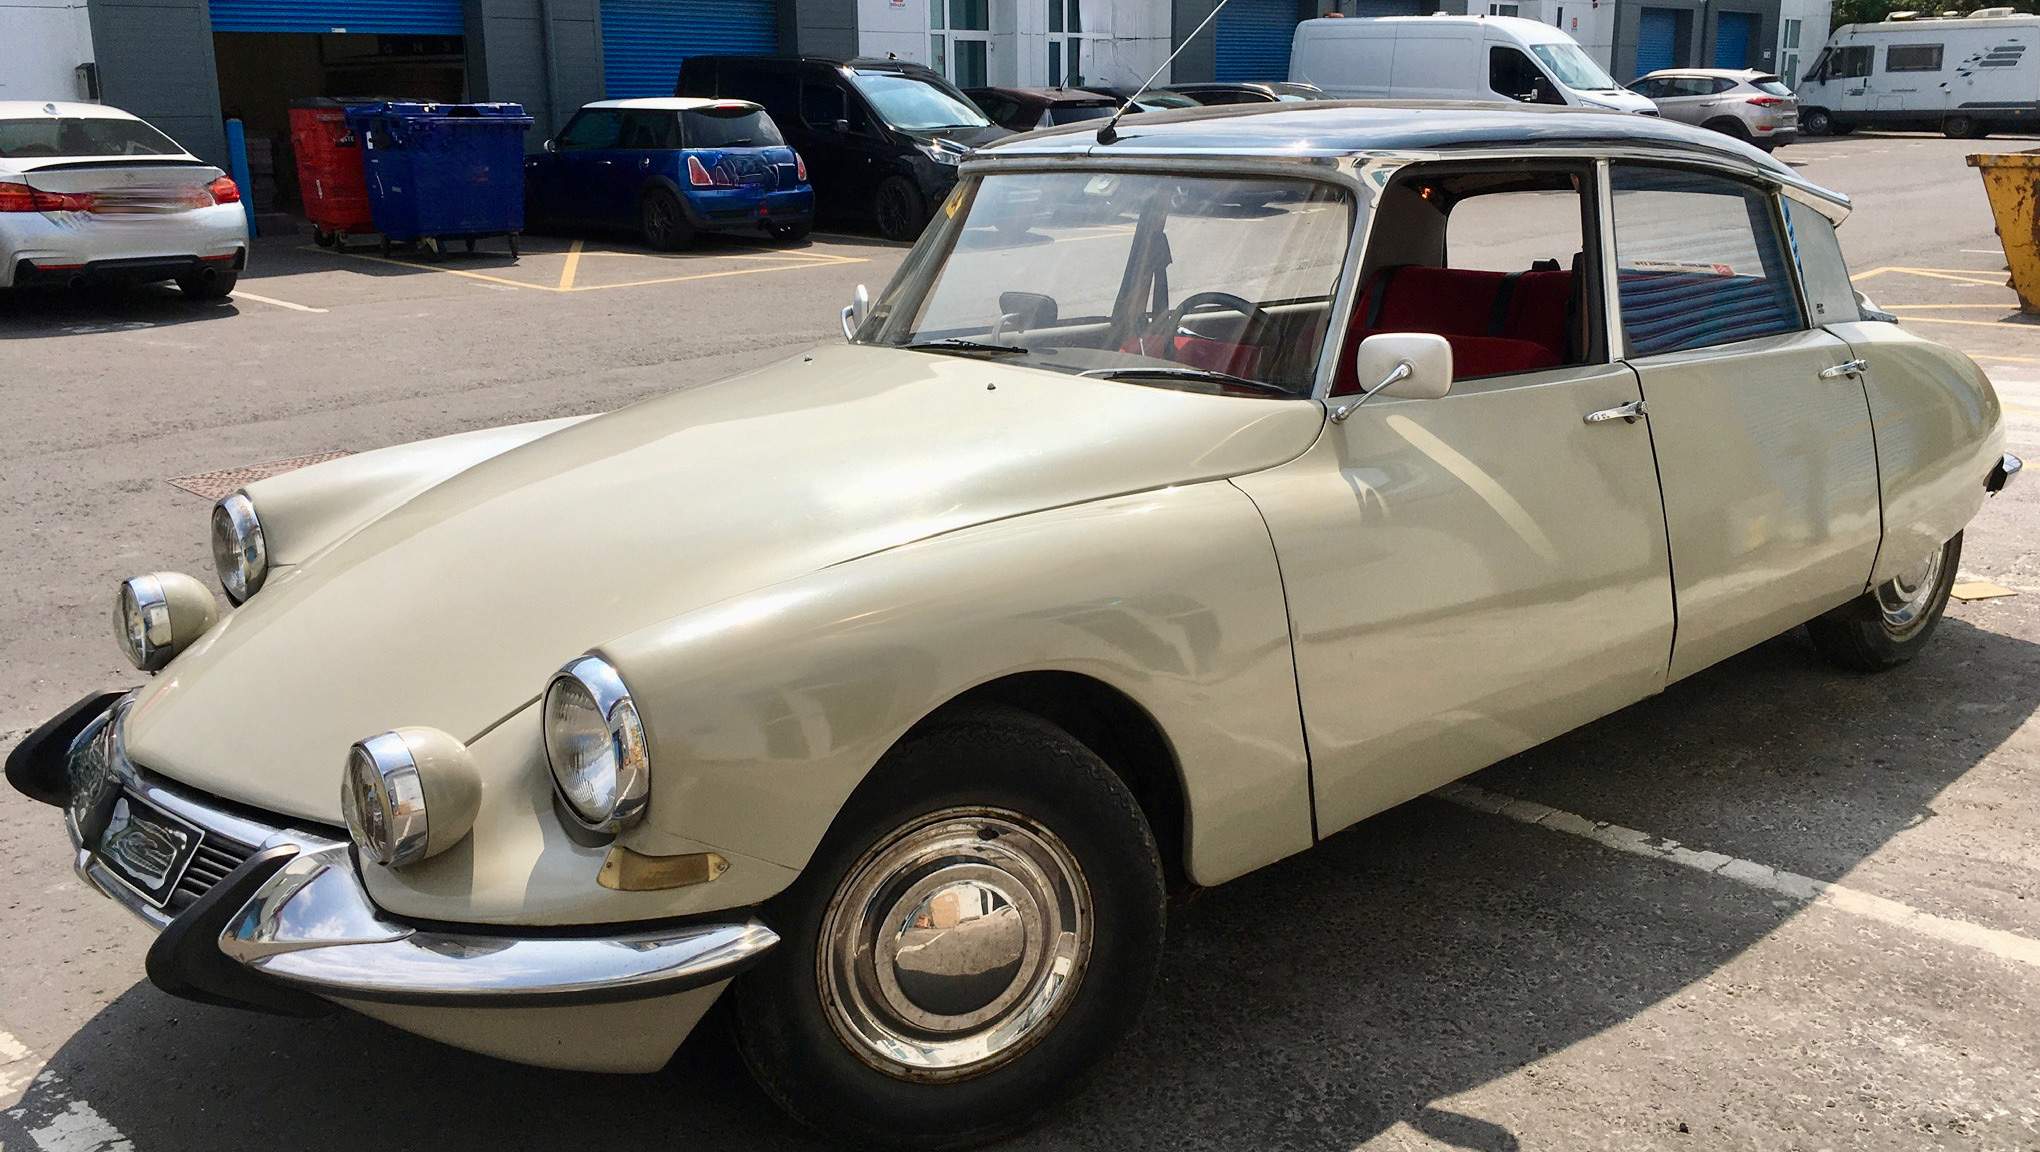 Citroën DS23 Pallas: A Fitting End - Old Motors